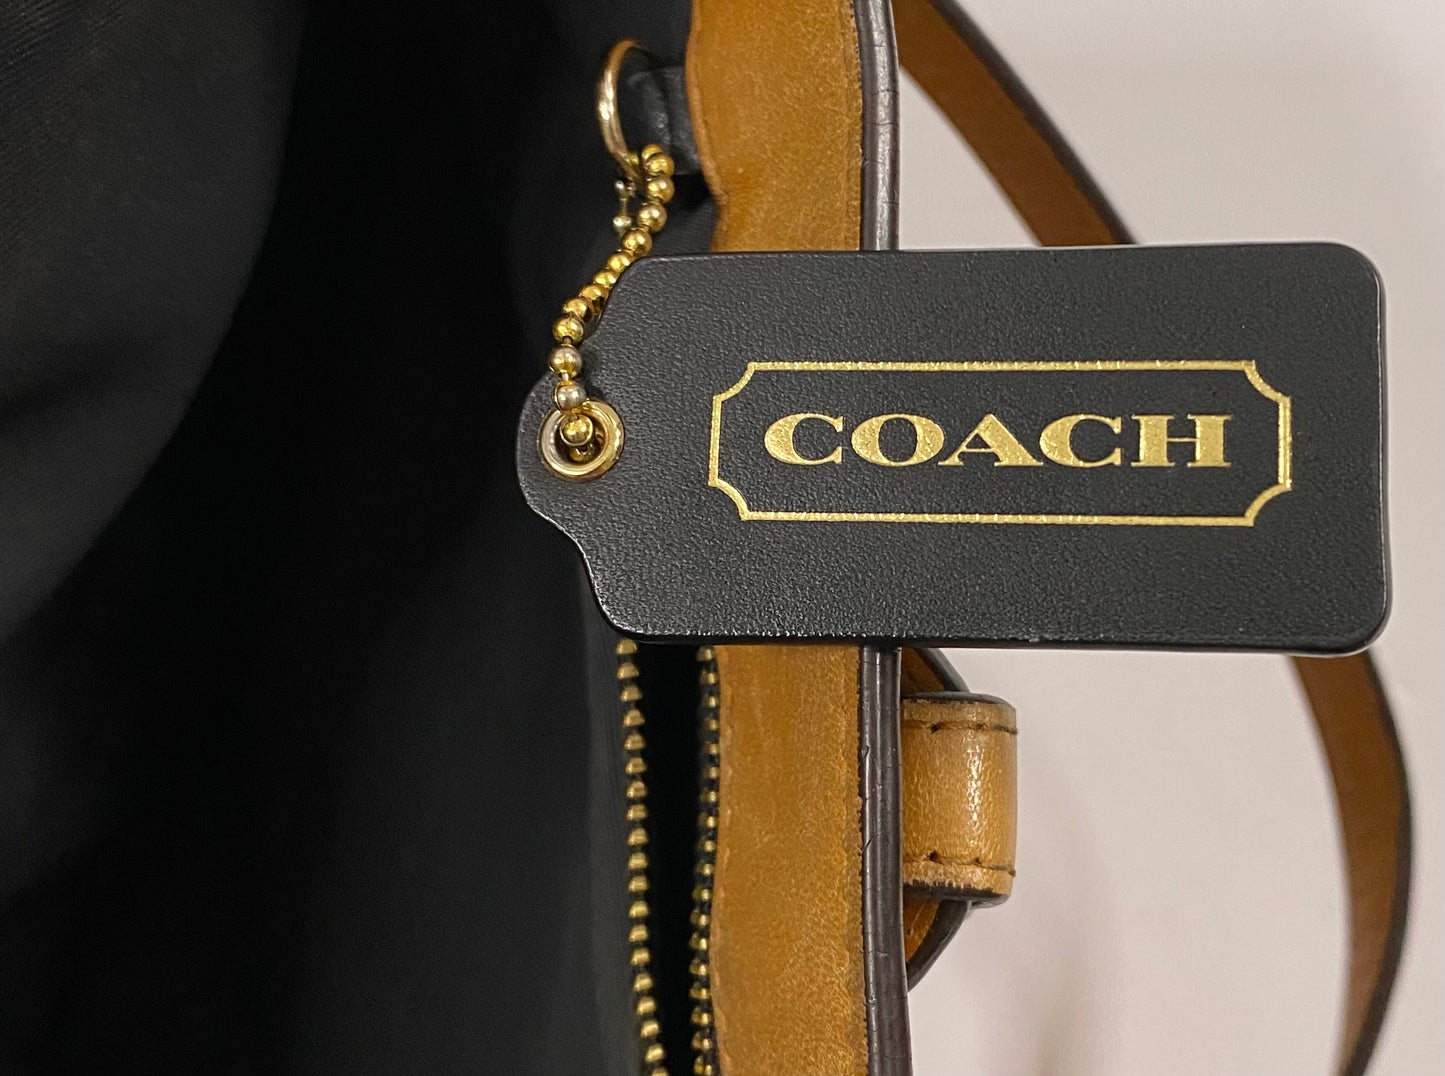 Coach Handbag Leather Tan    SKU 000358-1